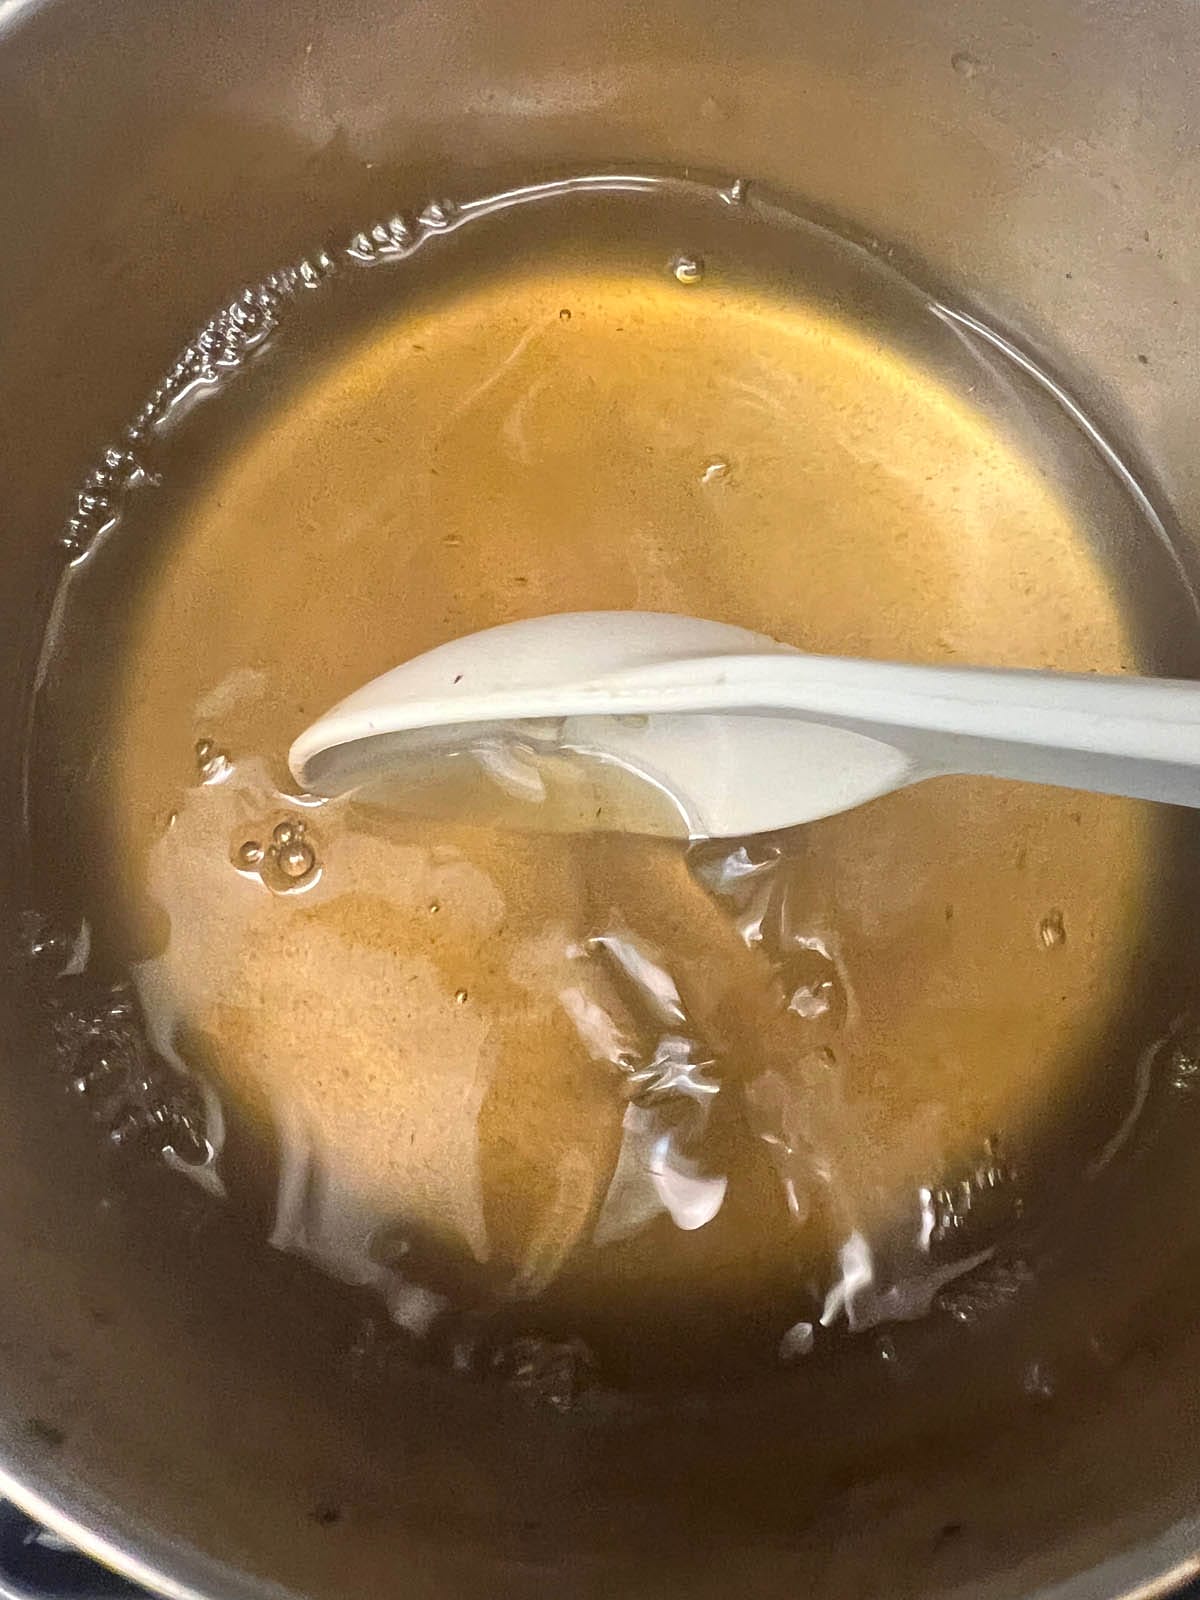 Saucepan with Yerba mate tea and dissolved sugar.